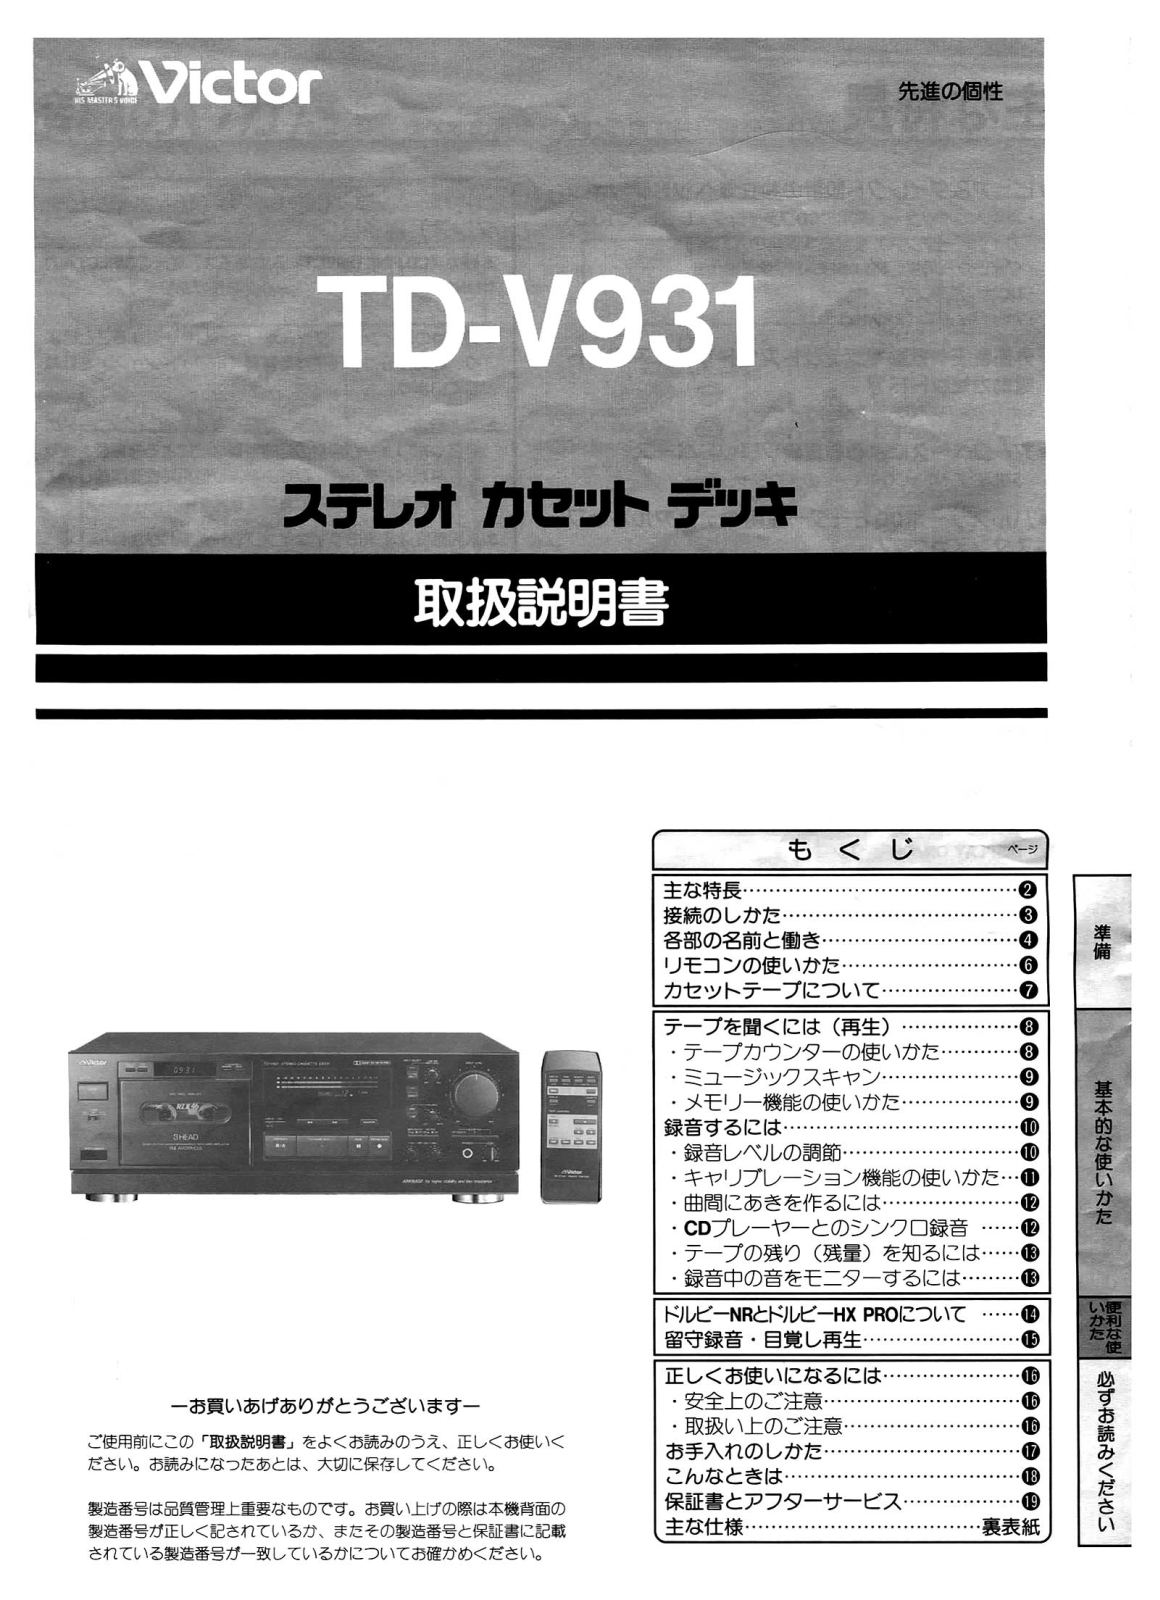 Jvc TD-V931 Owners Manual